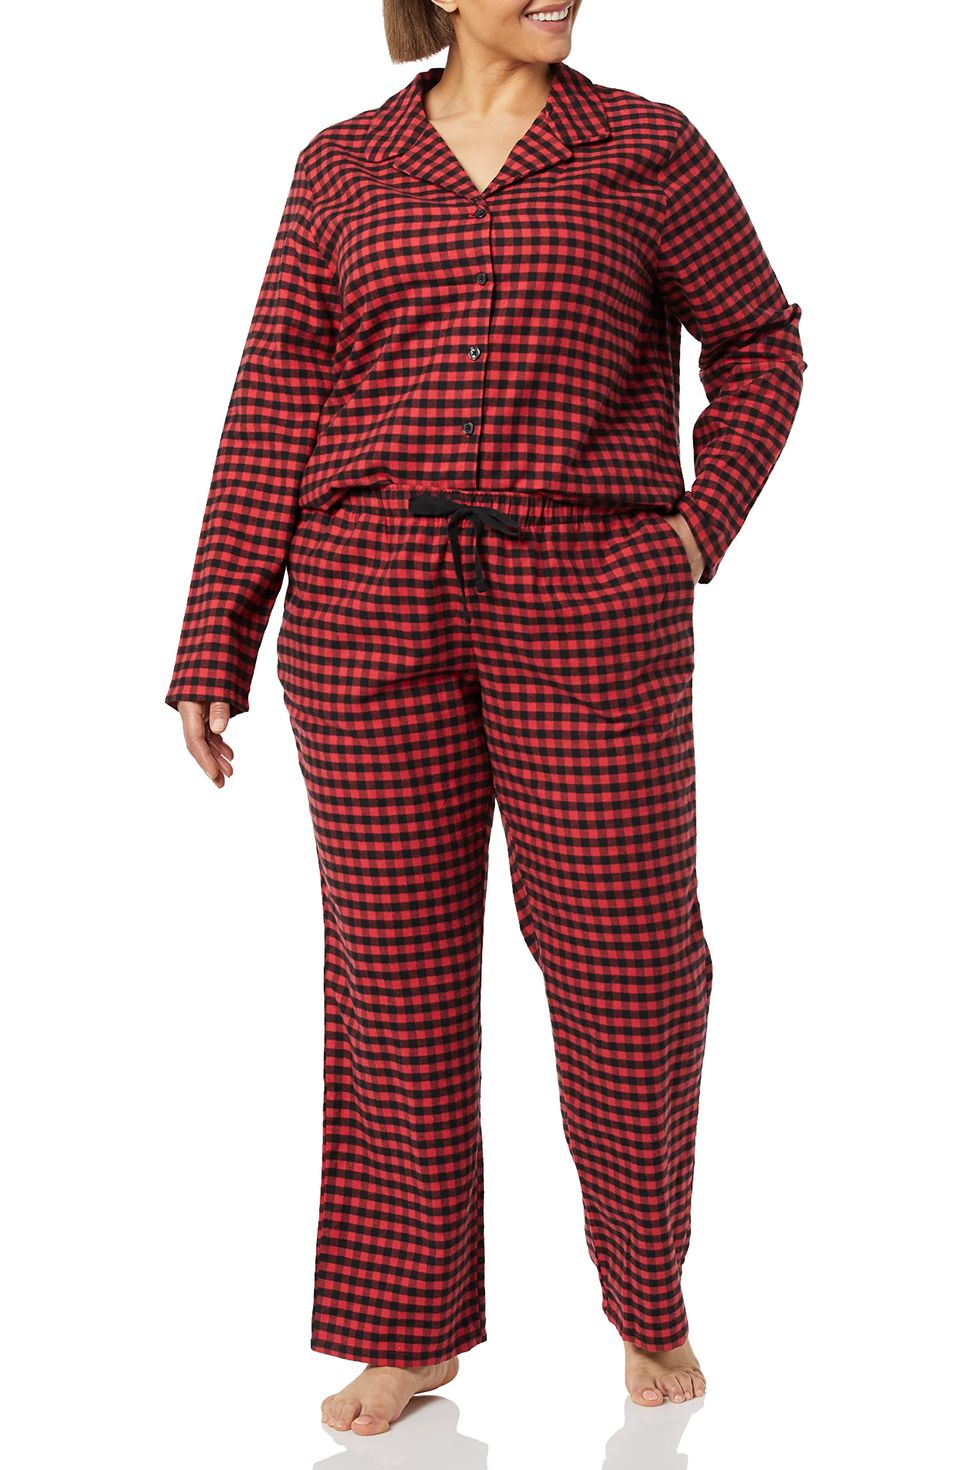 Adult Women Men Unisex Pajama Drawstring Pants Plaid Red White Black Cotton PJ  Bottoms Fall Pocket Pajama Set Small Medium Large XL -  Canada